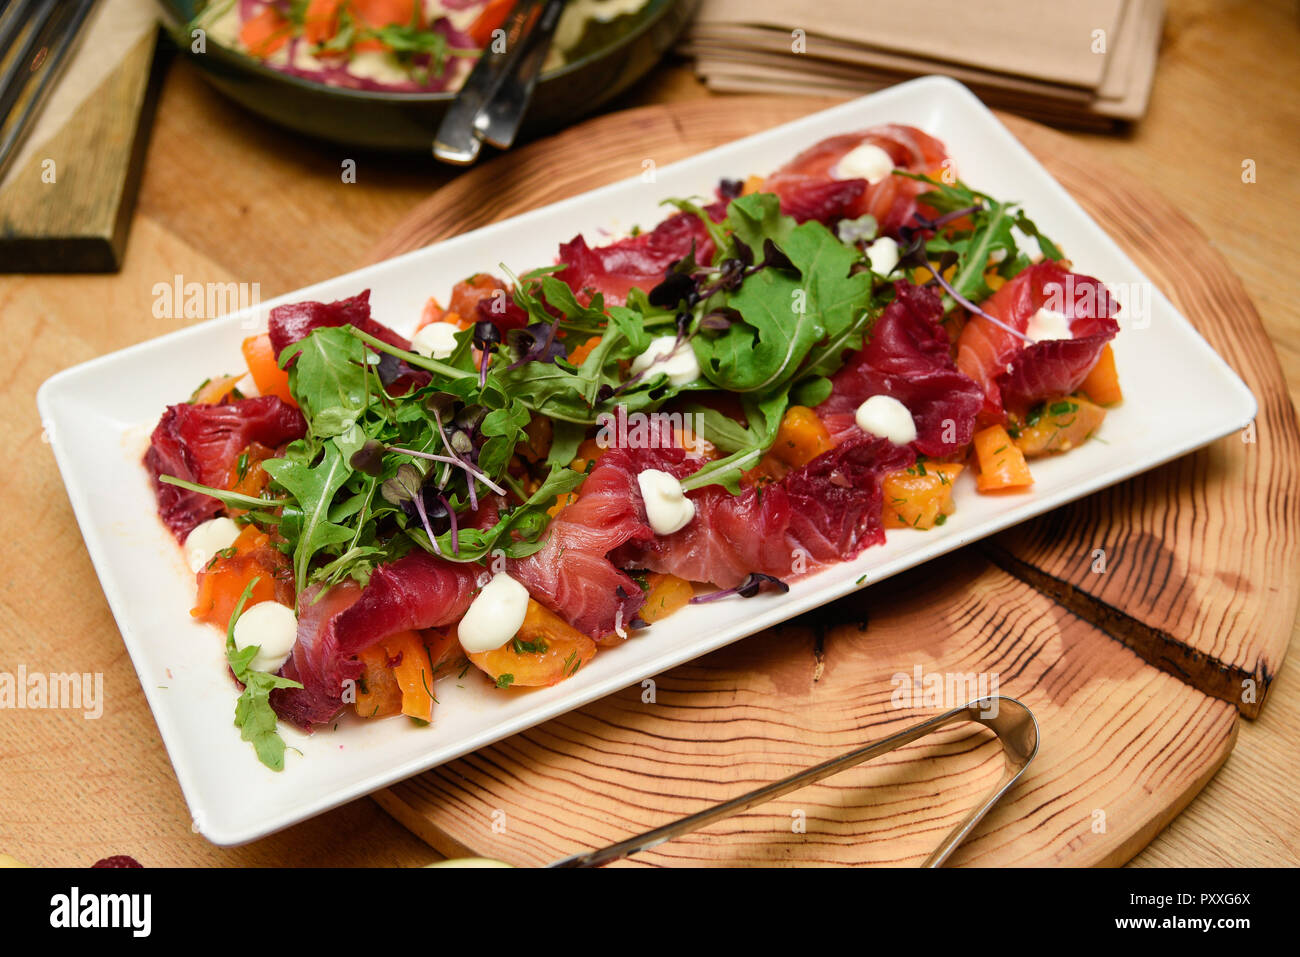 Smoked salmon salad plate with arugula leafs and mozzarella cheese. Stock Photo